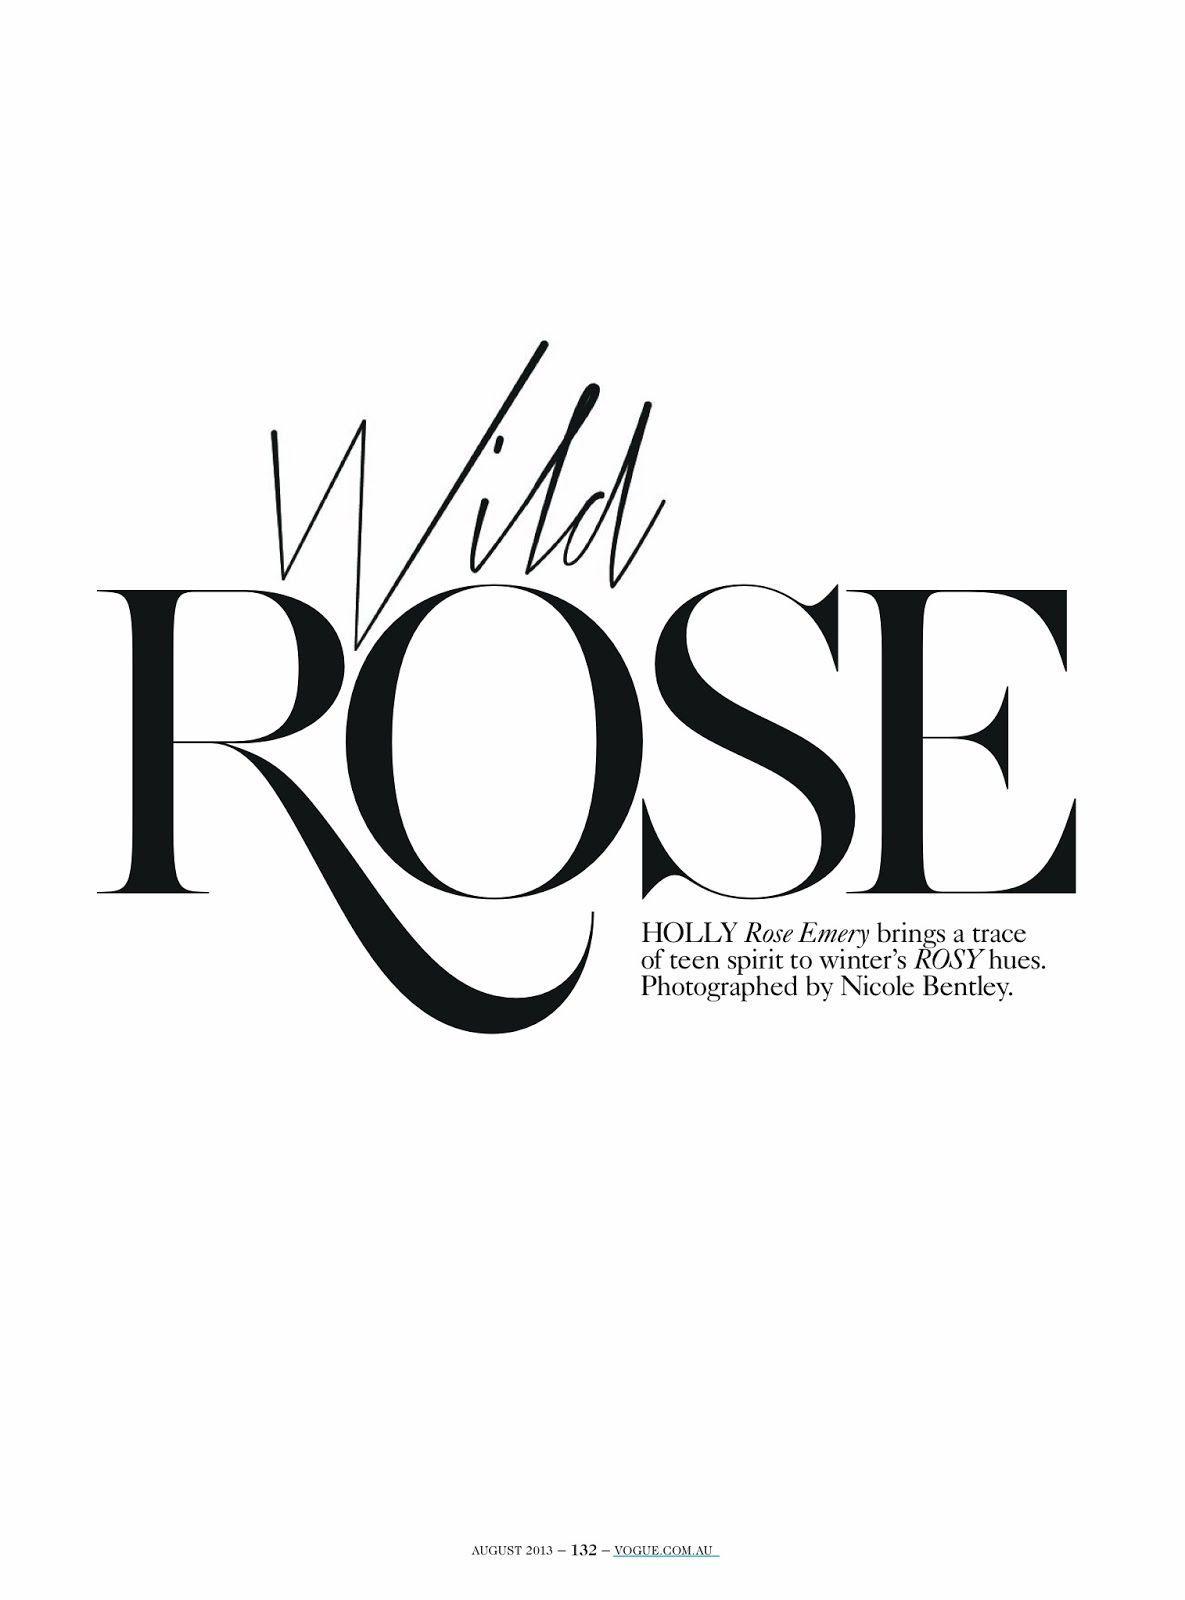 Vogue.com Logo - Vogue Wild Rose Ad Campaign // Fonts: Xtreem Thin, Didot, Times ...